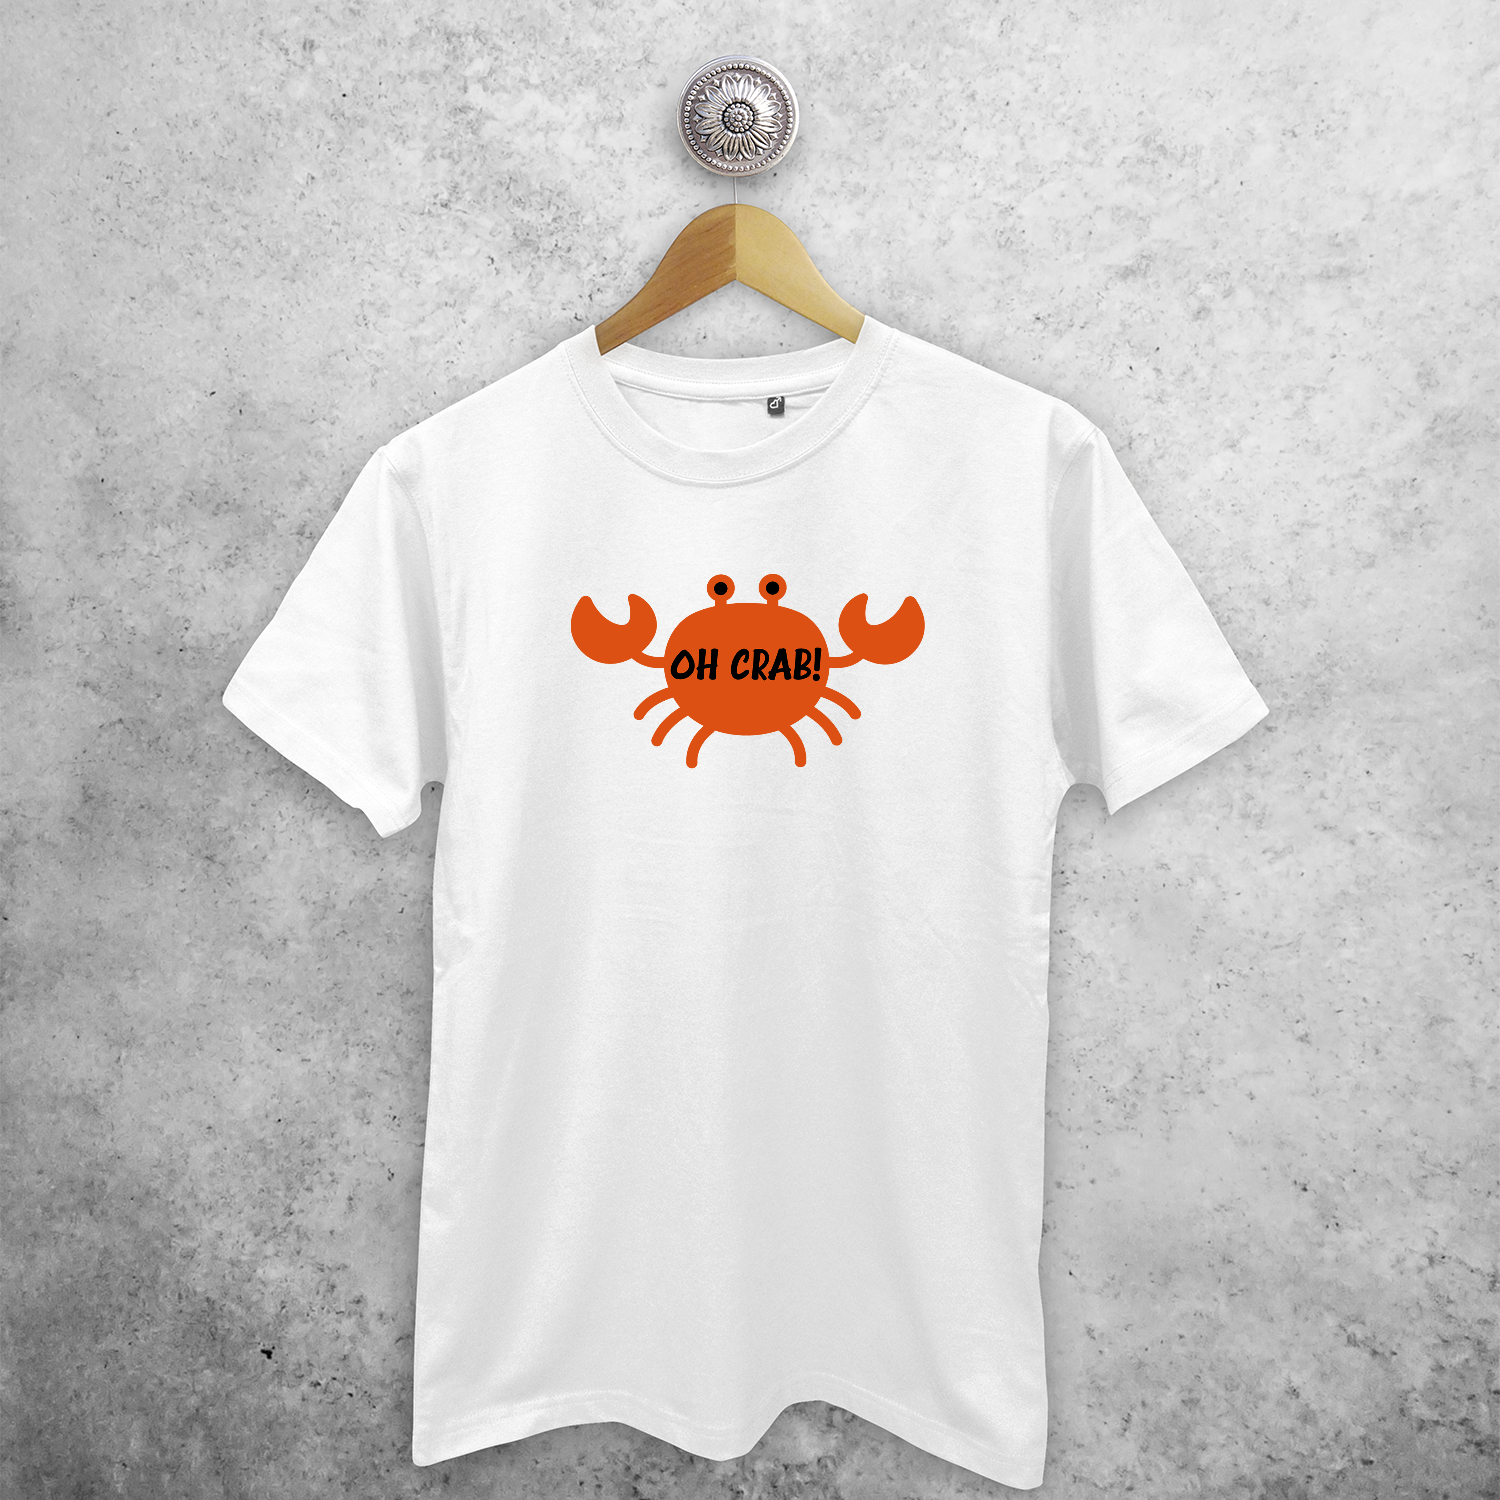 Oh crab!' volwassene shirt